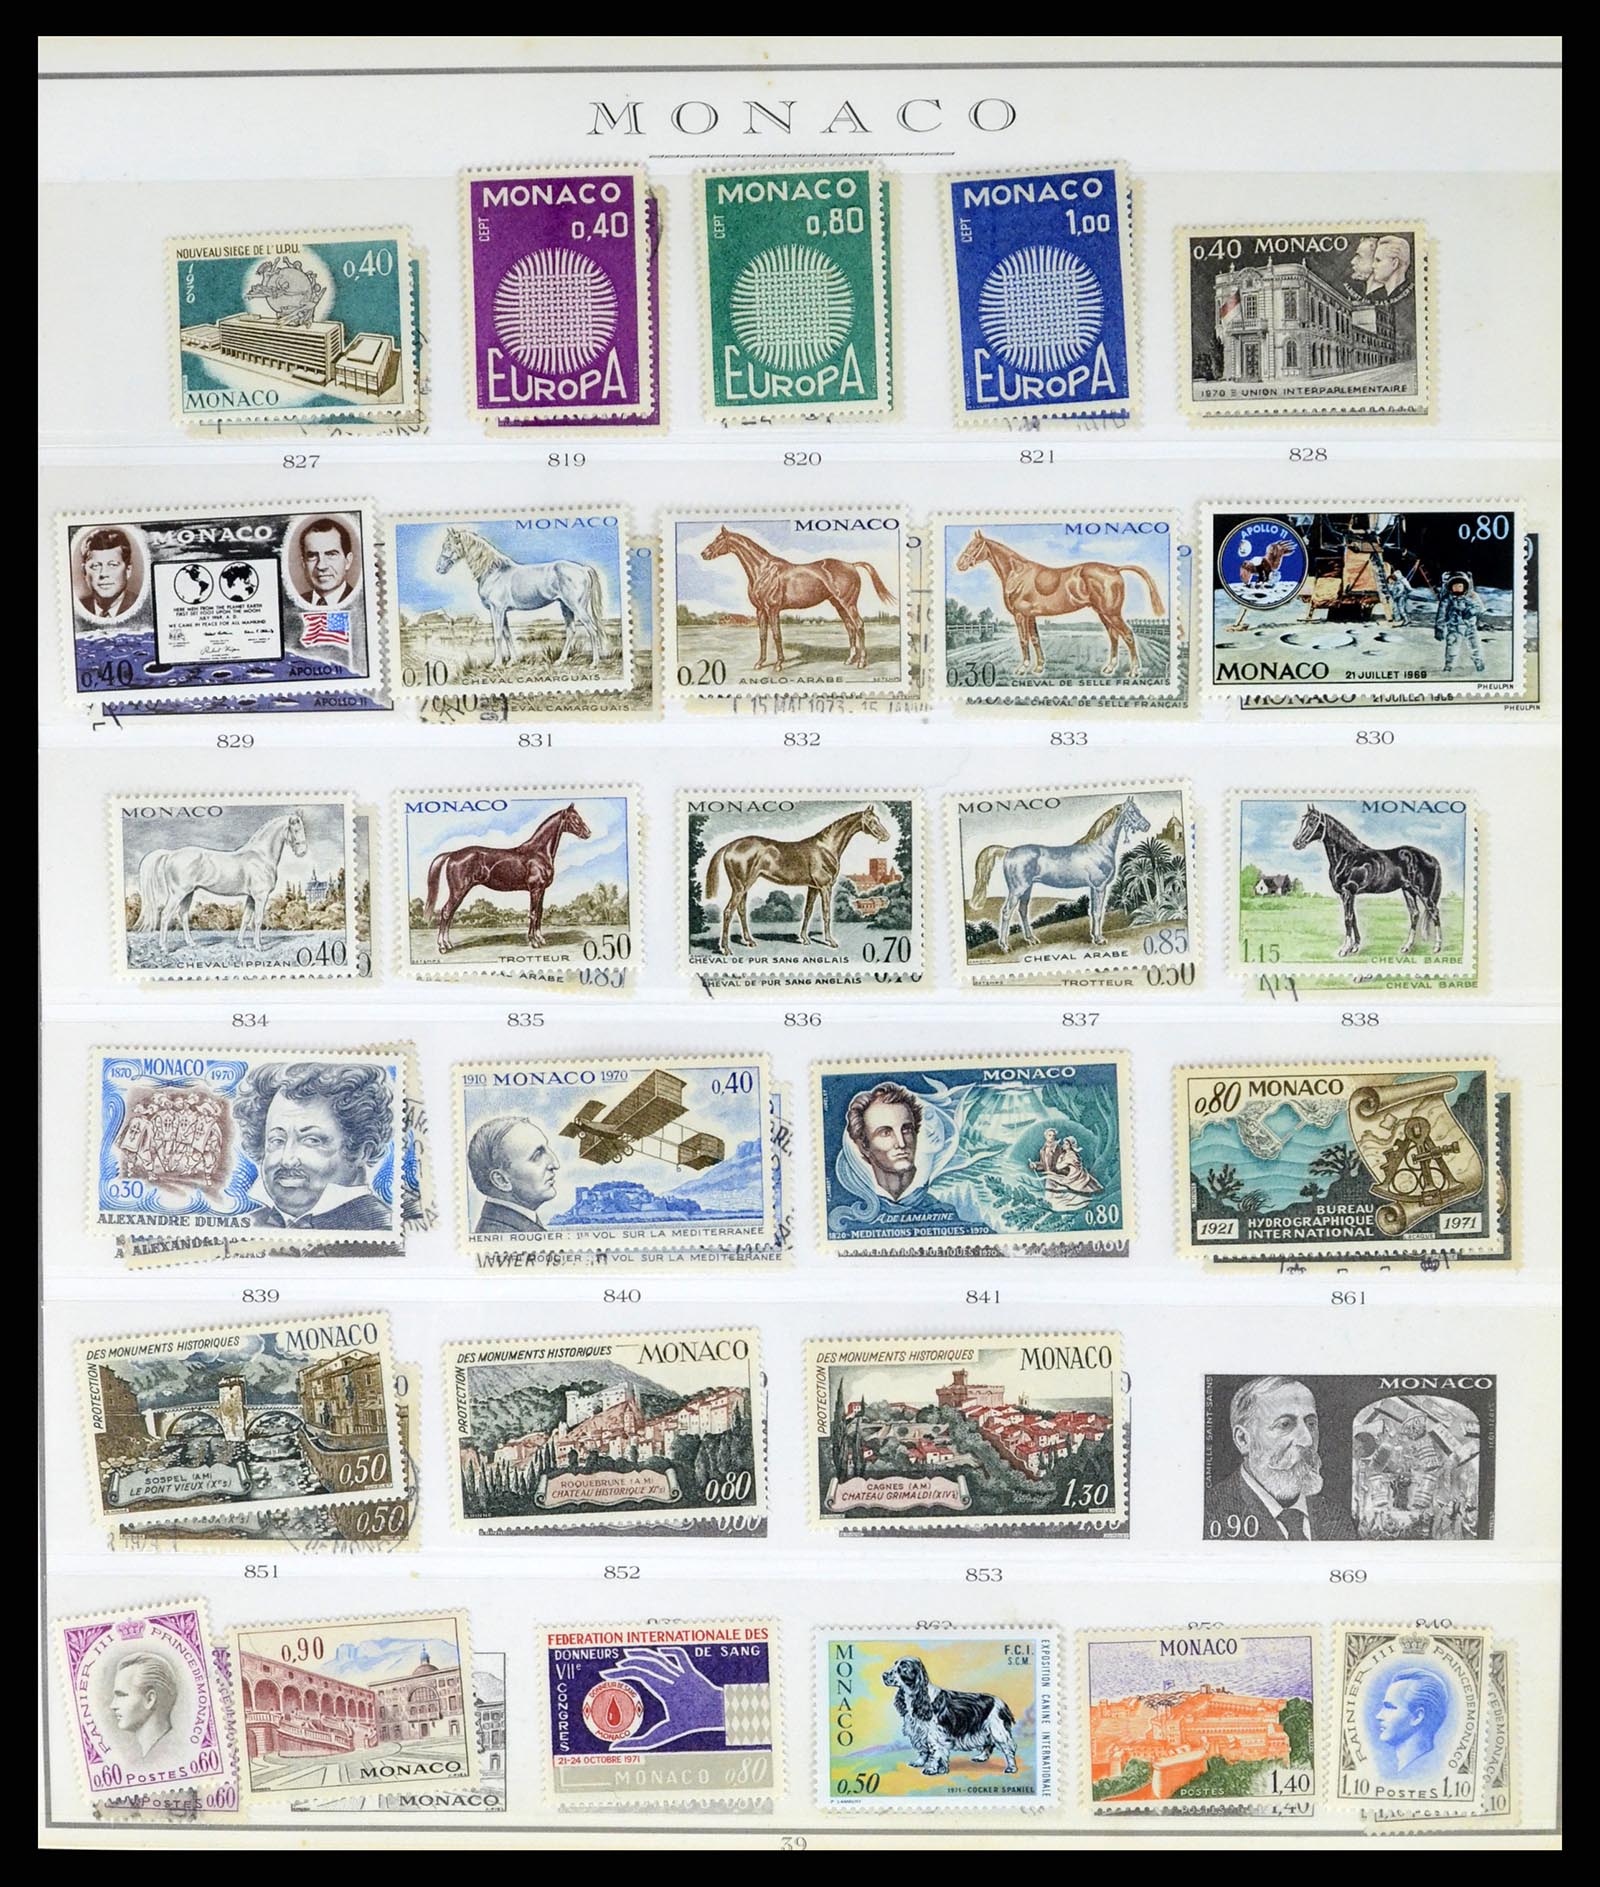 37437 075 - Stamp collection 37437 Monaco 1885-1996.